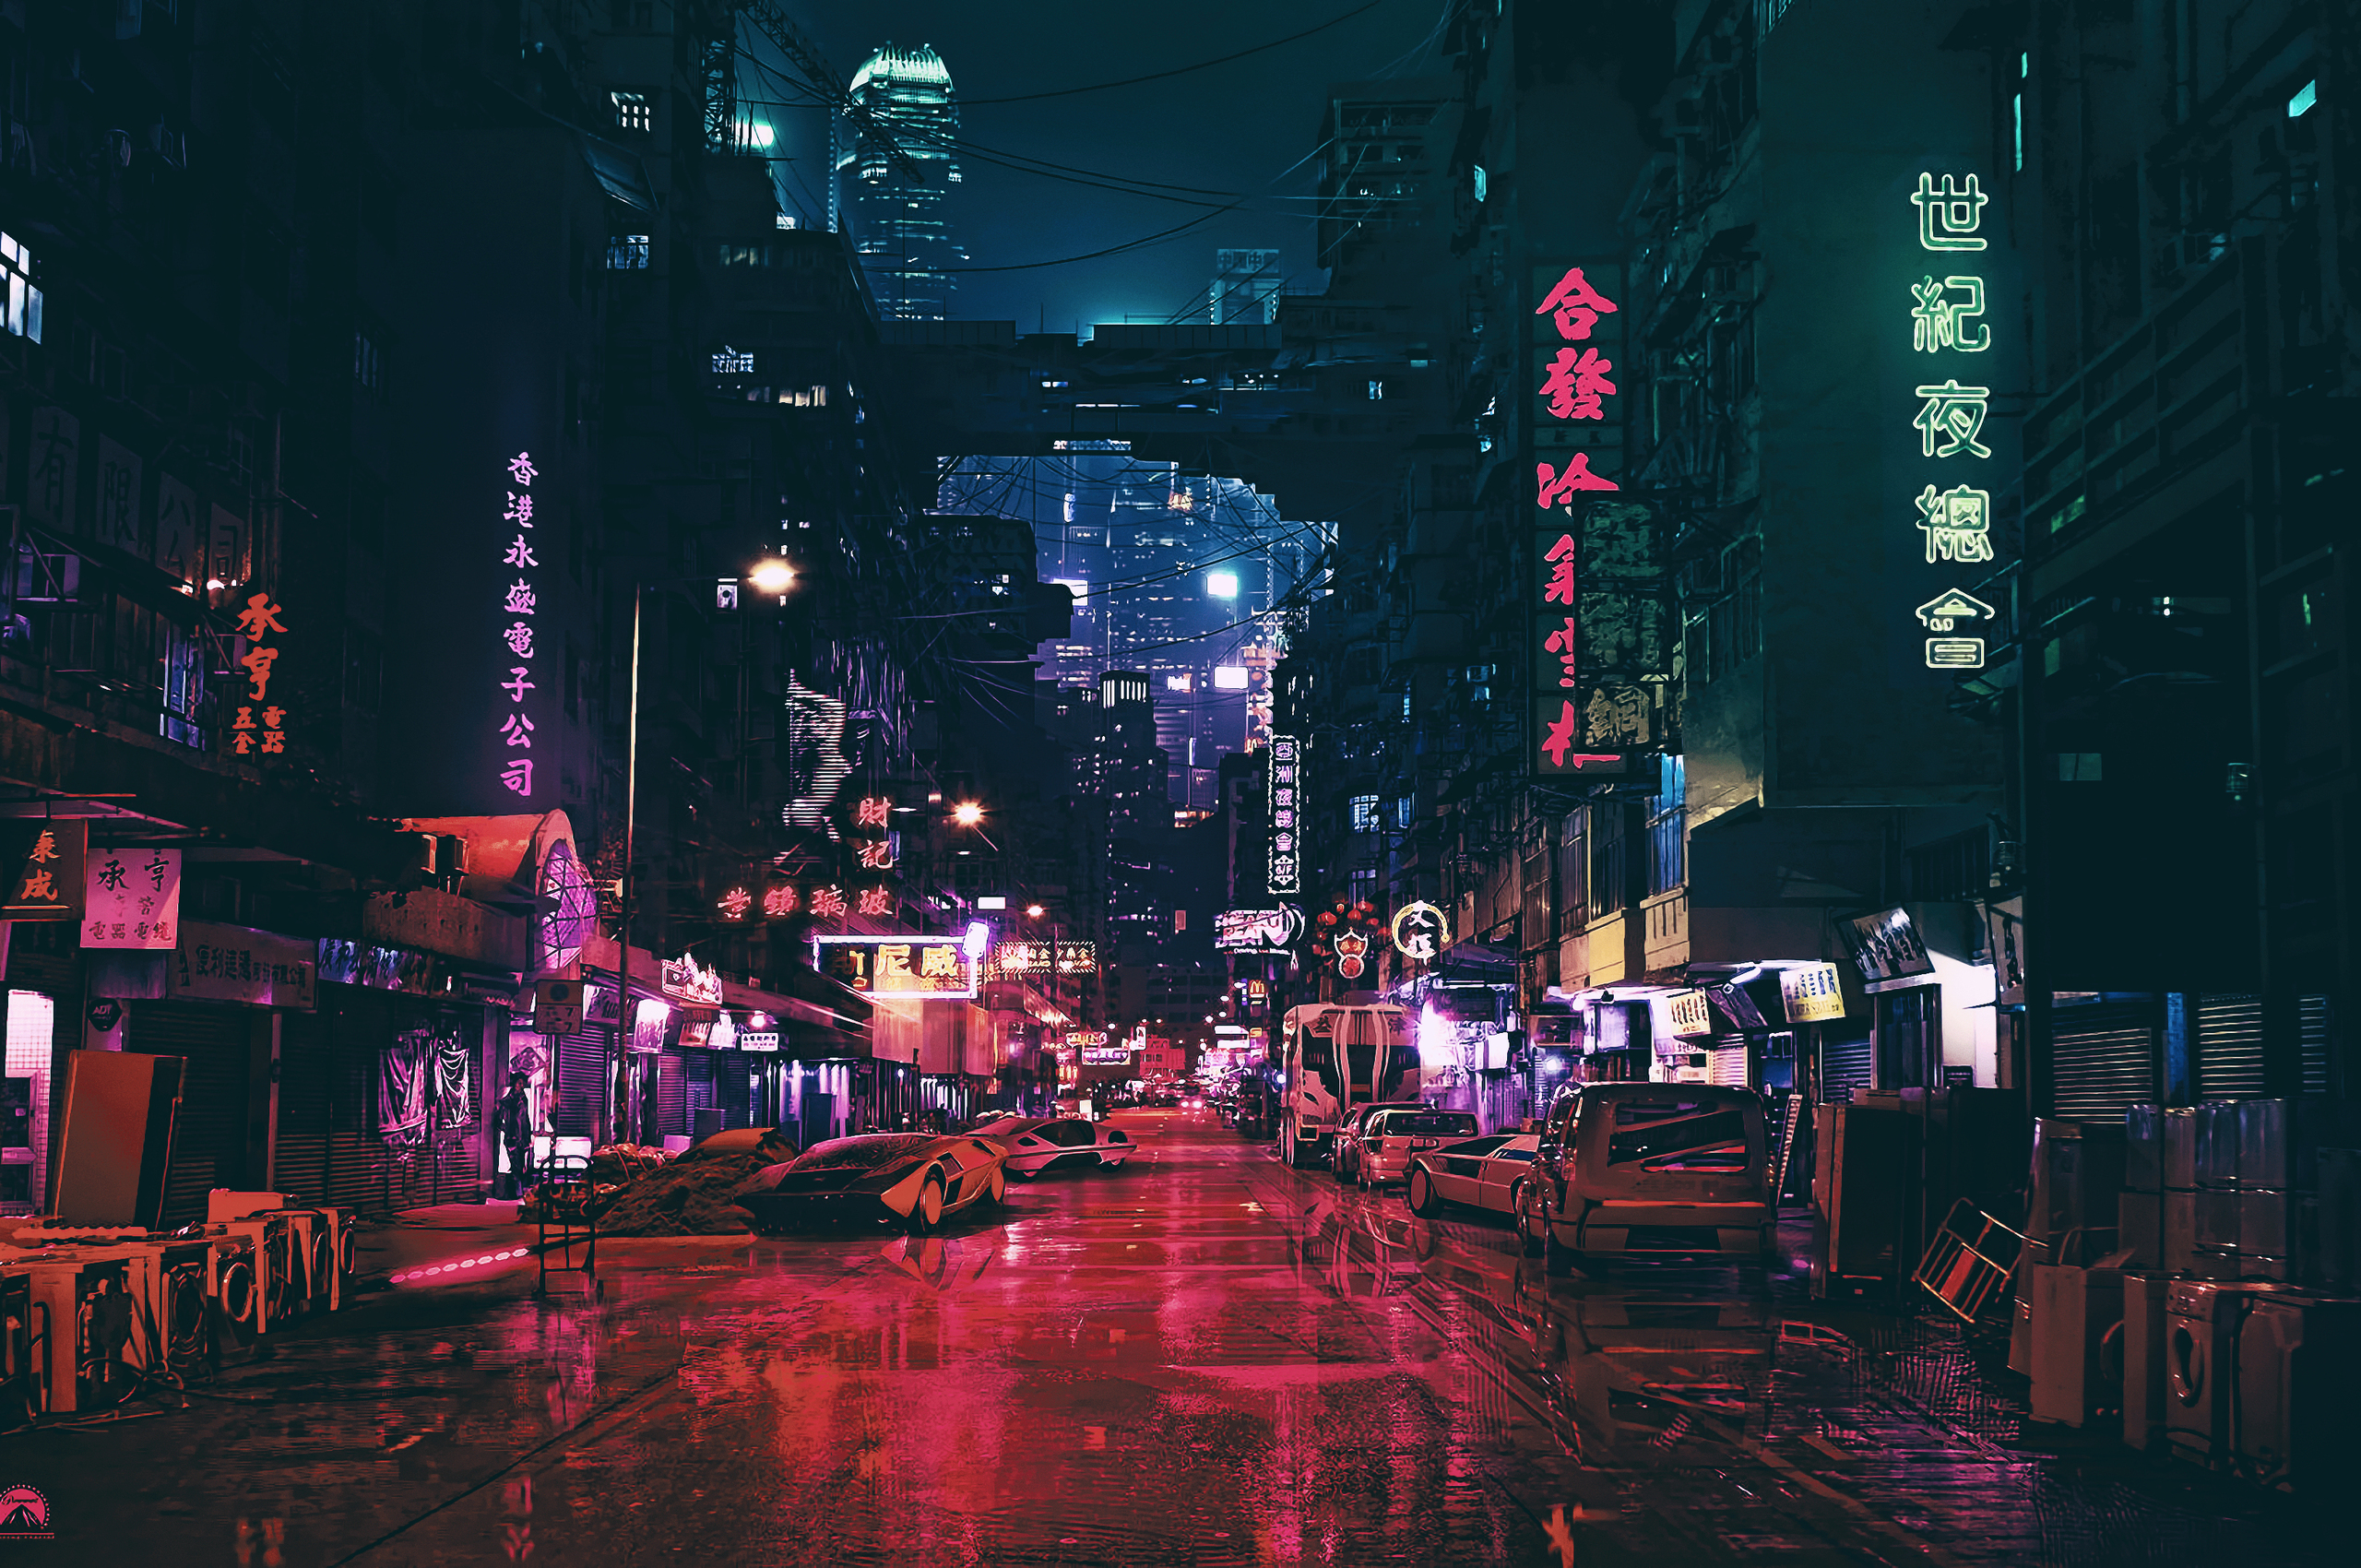 Cyberpunk Futuristic City Science Fiction Concept Art 4k Chromebook Pixel HD 4k Wallpaper, Image, Background, Photo and Picture